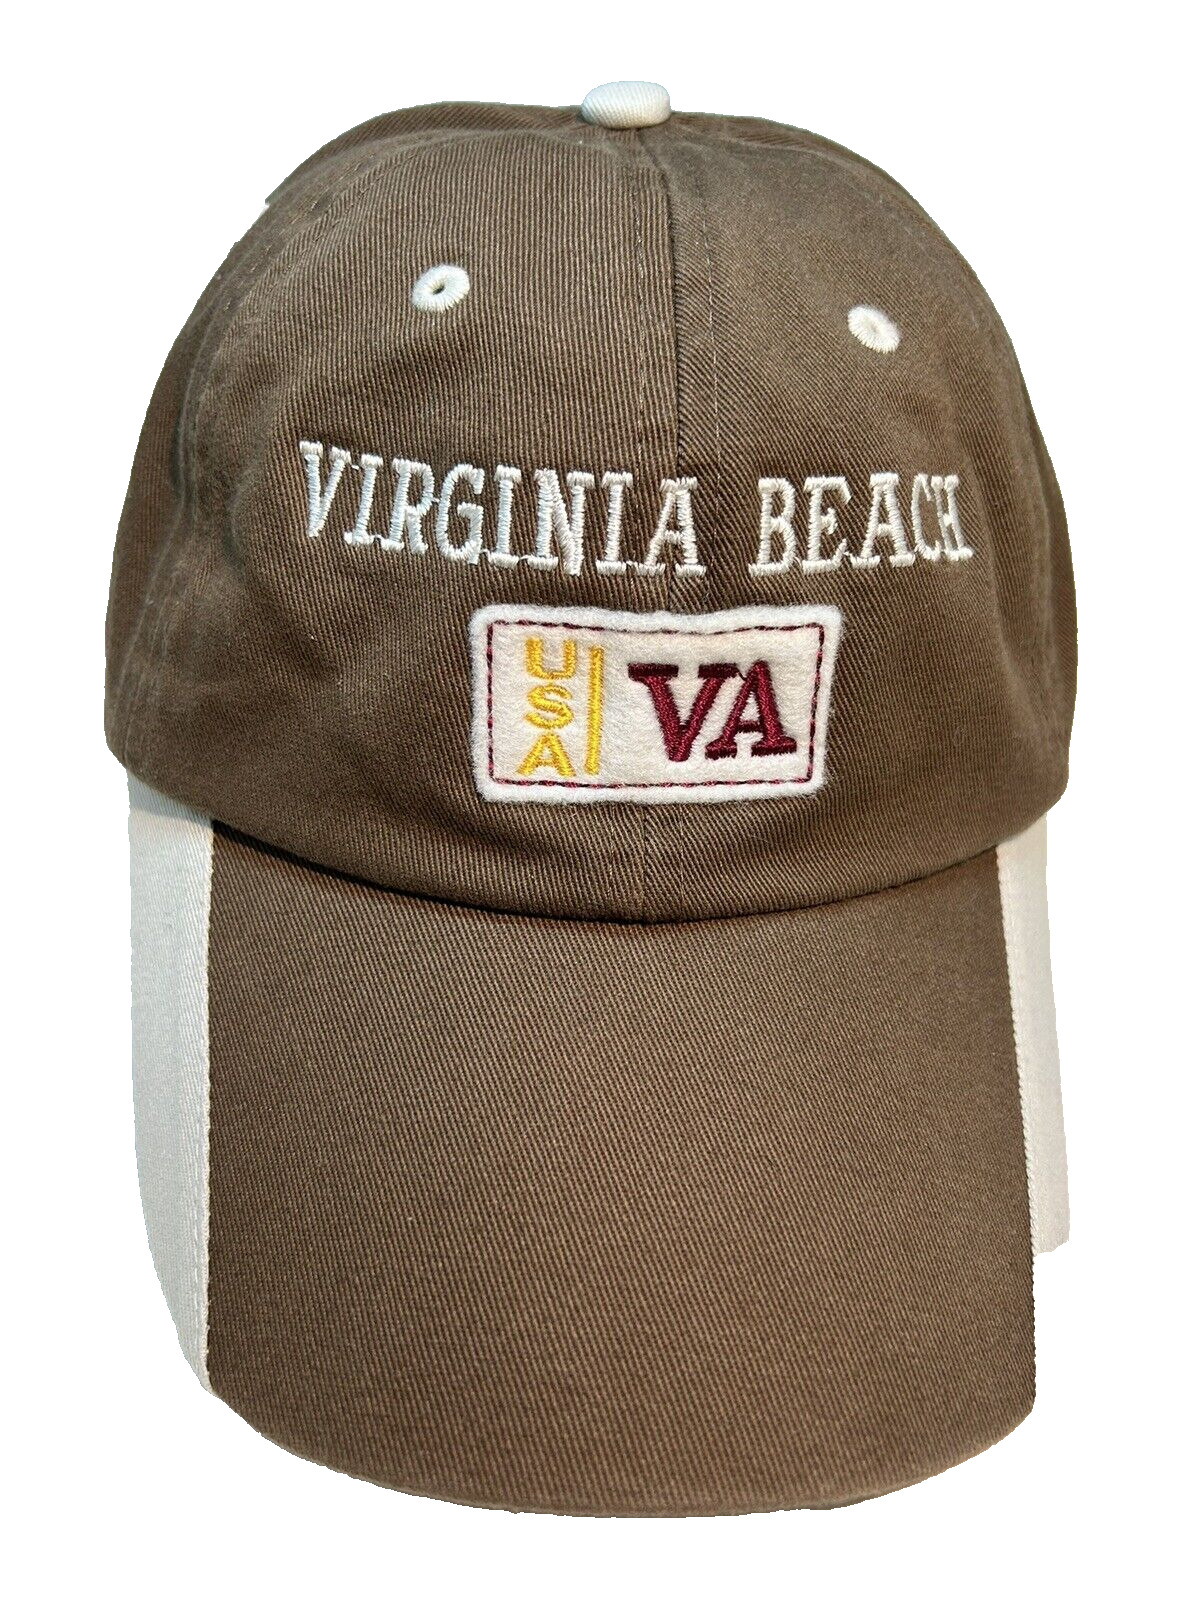 Virginia Beach Hat Baseball Cap Tan Brown adjustable hook and loop Embroidered